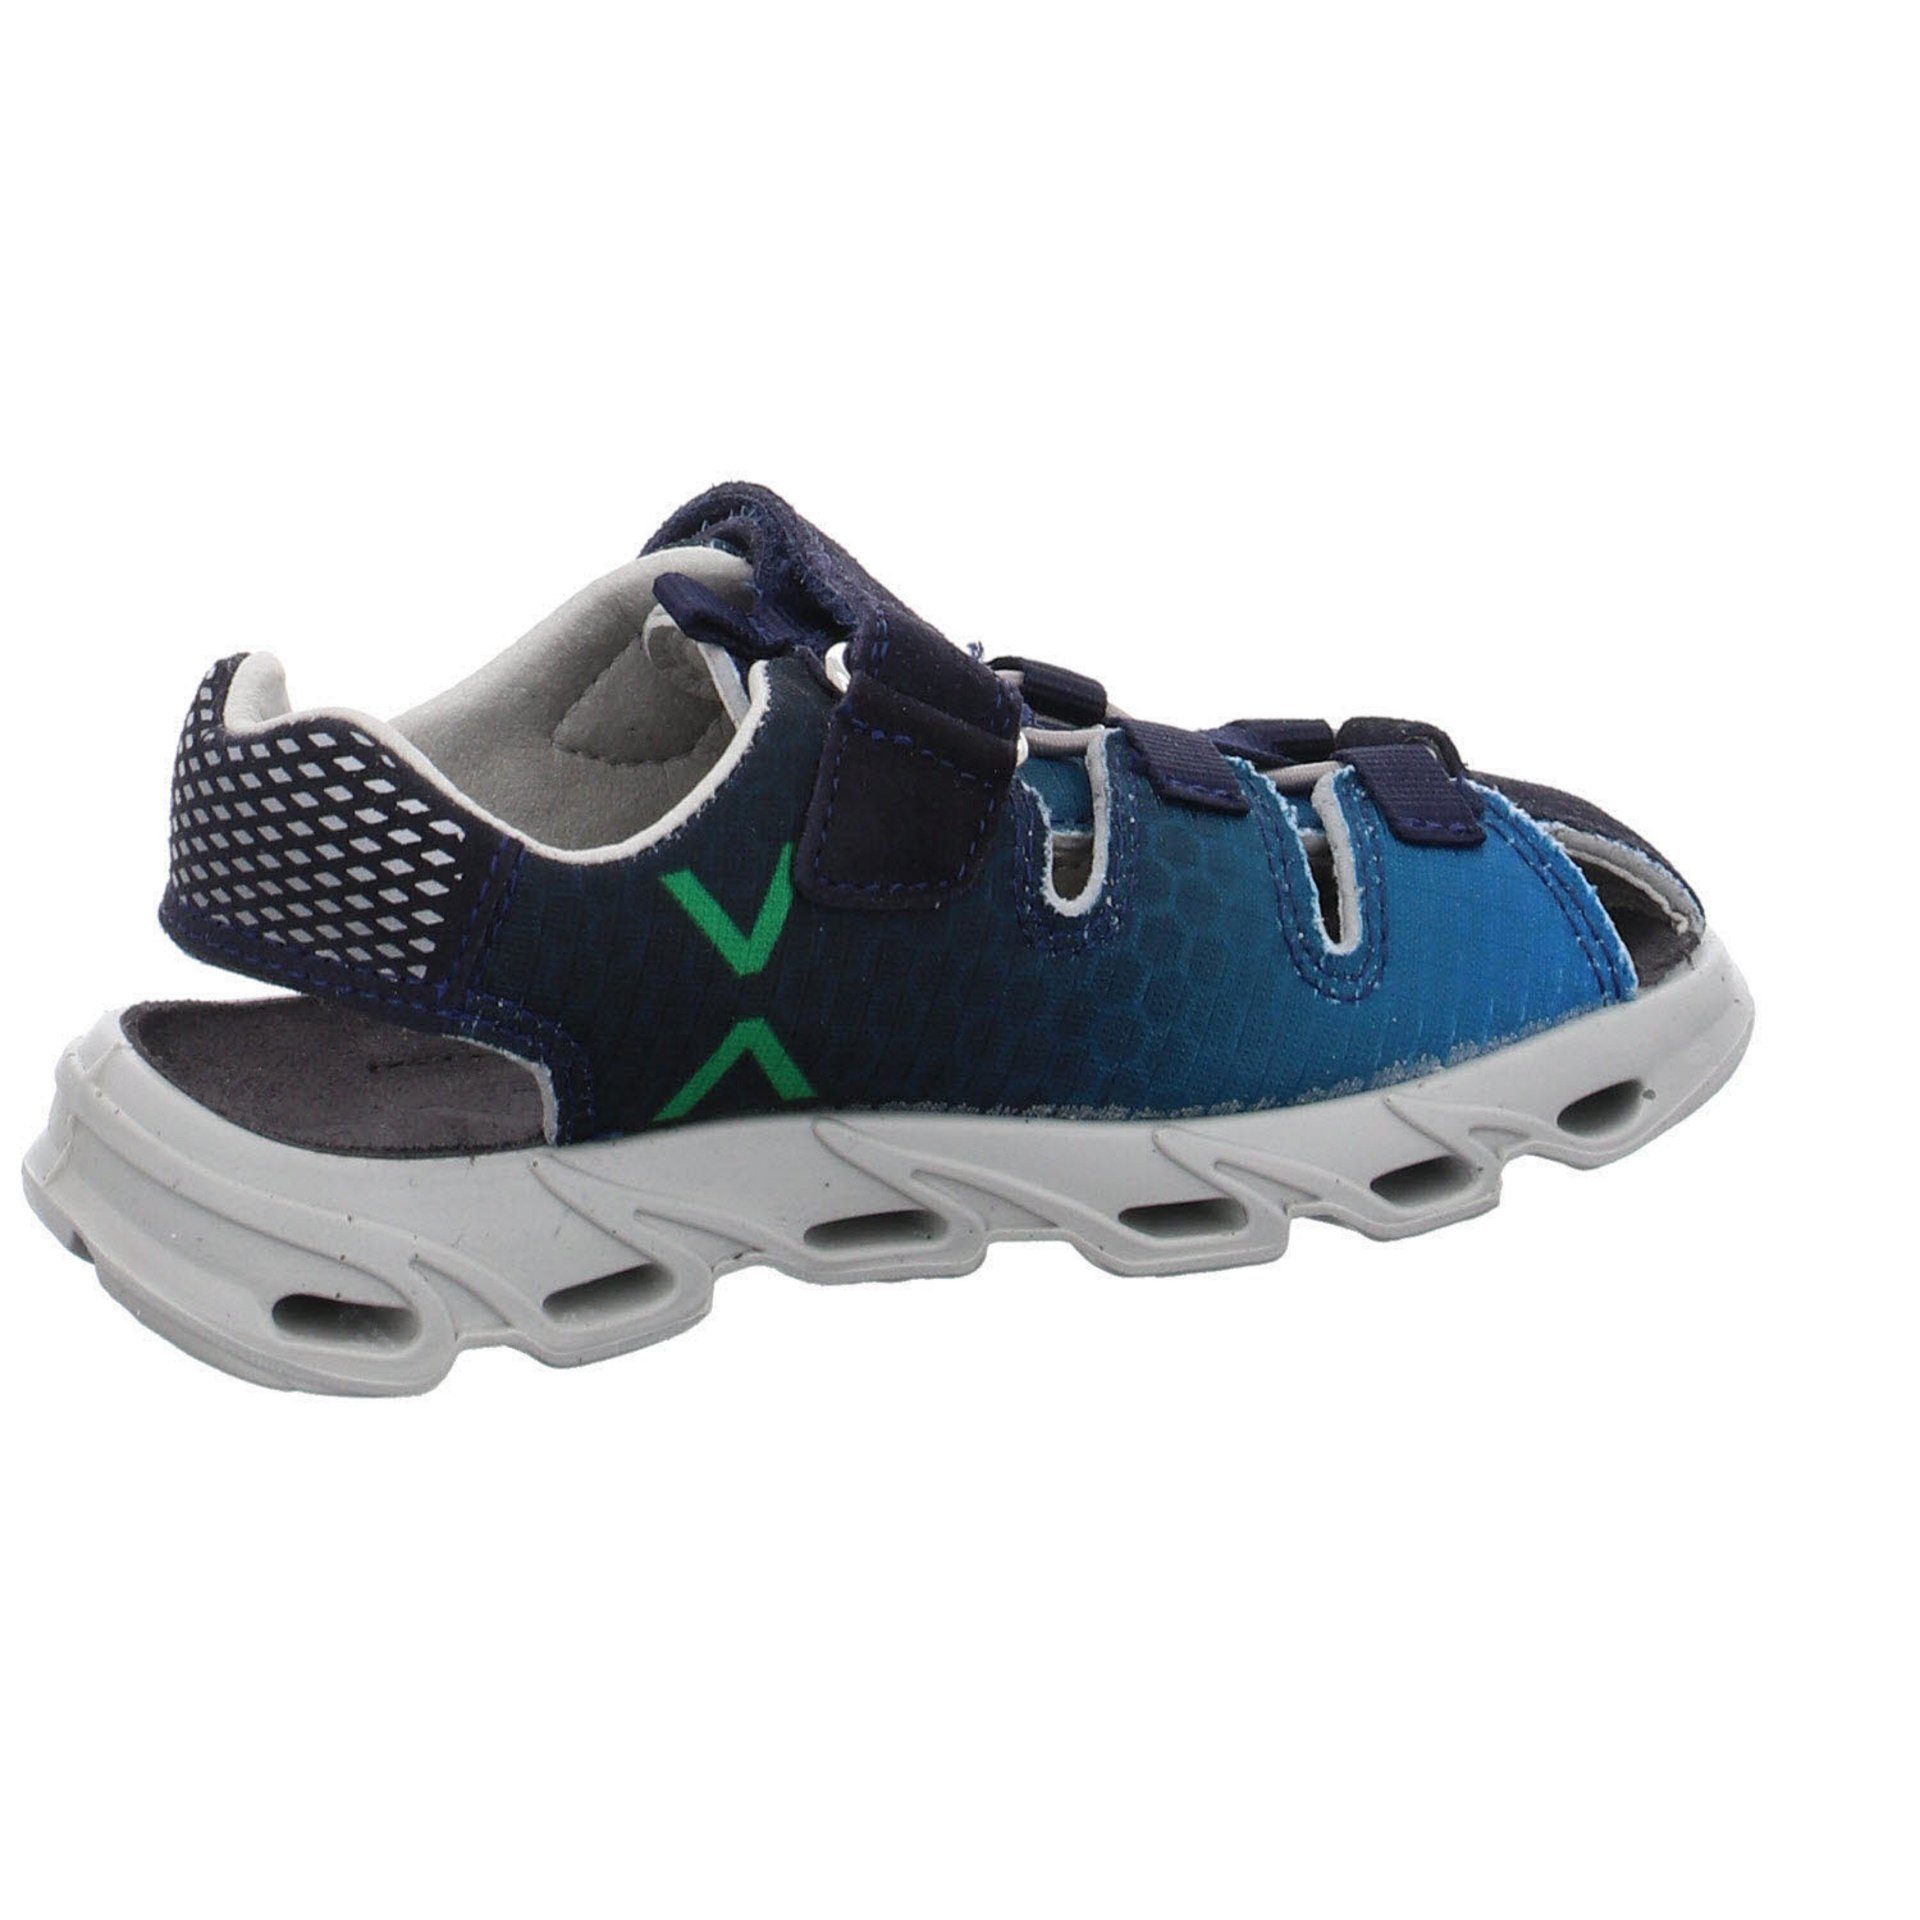 Vado Jungen Sandalen Schuhe Textil Sandale Sandale Kinderschuhe Box Blau